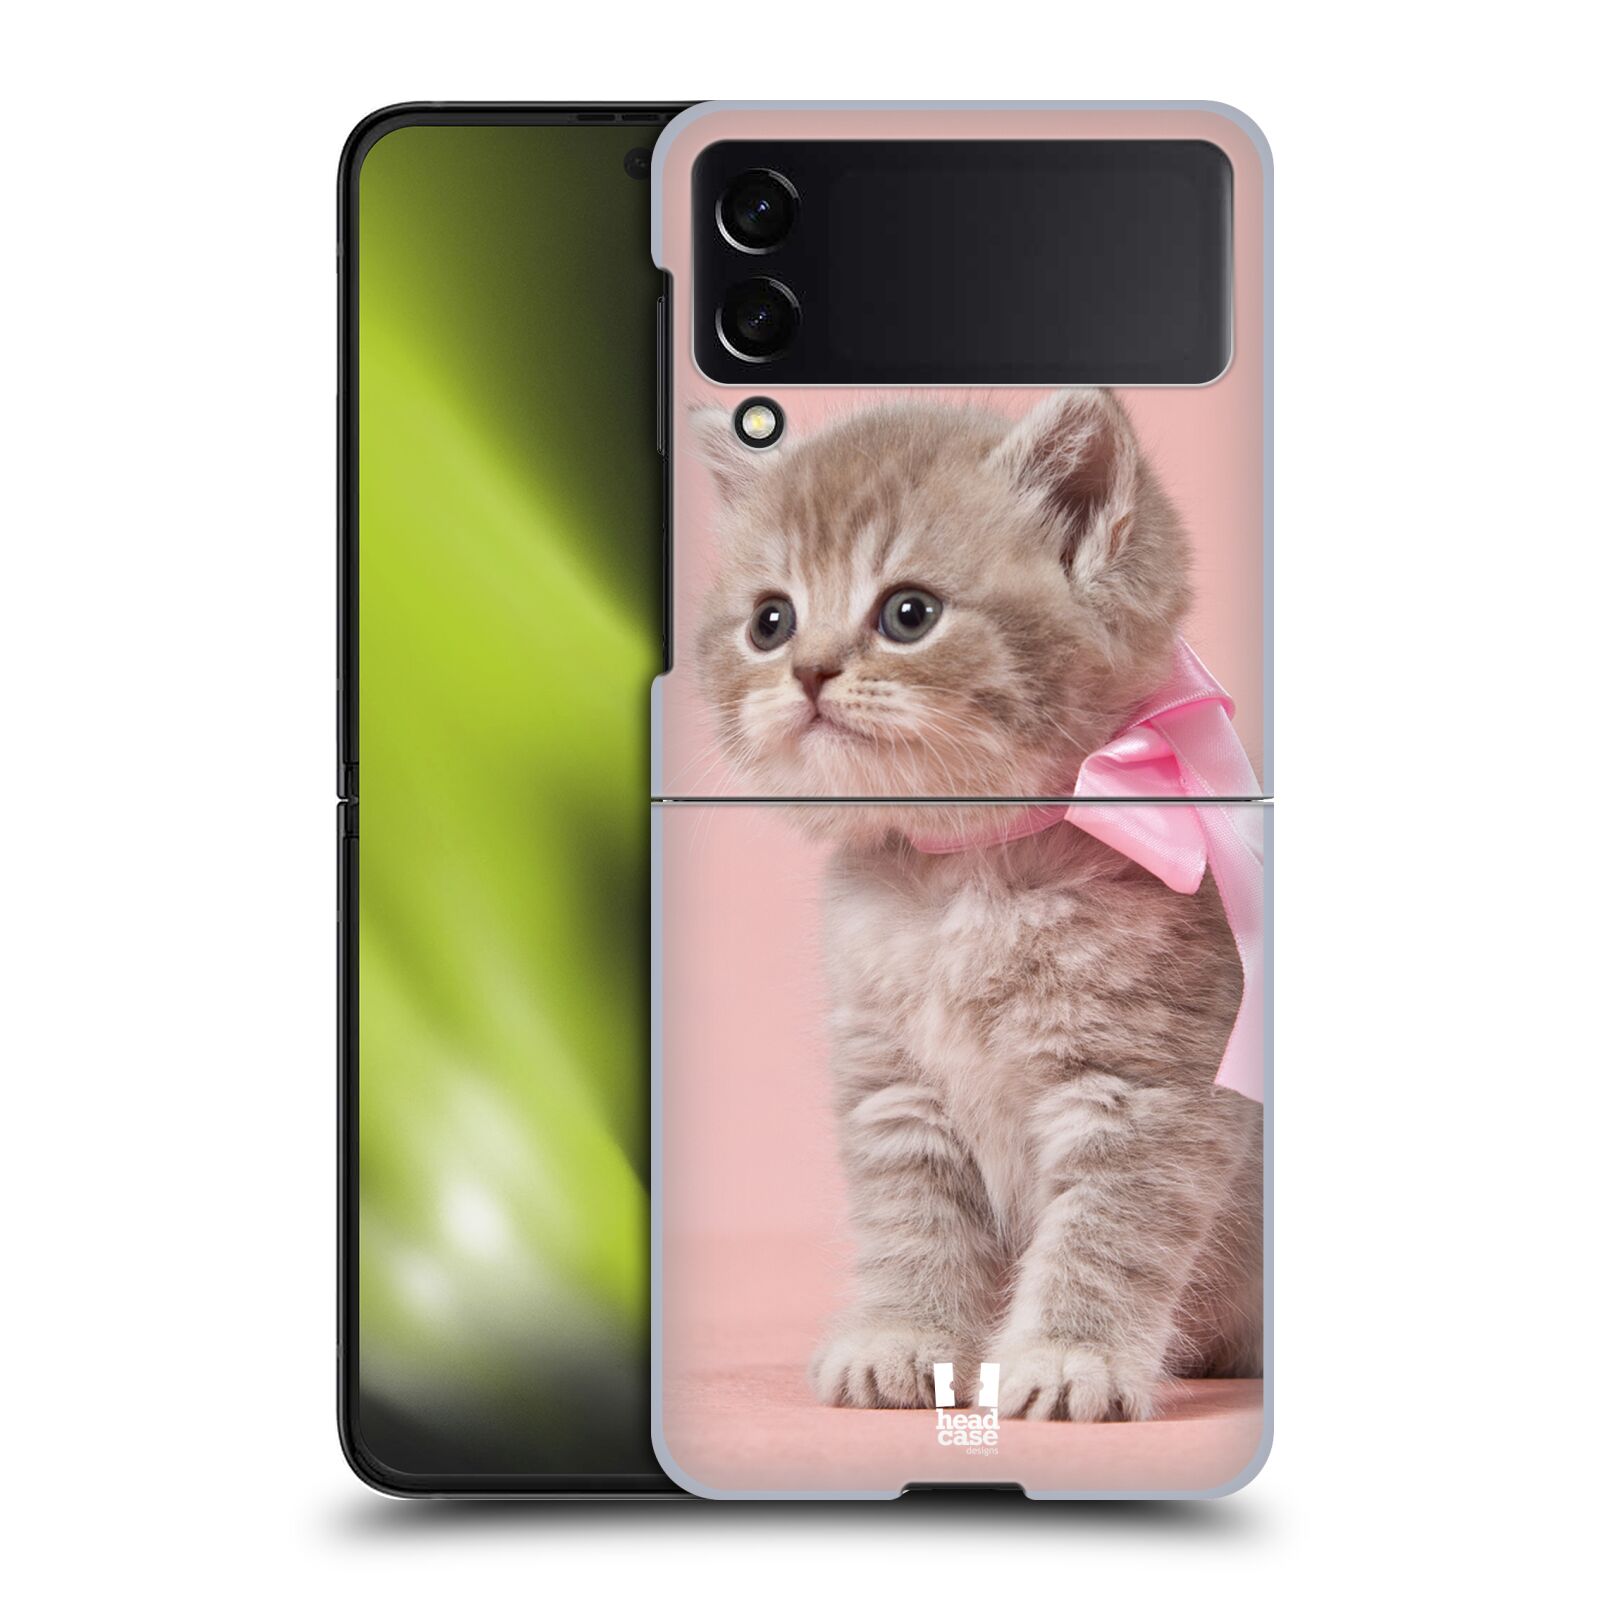 Plastový obal HEAD CASE na mobil Samsung Galaxy Z Flip 4 vzor Kočičky koťata foto kotě s růžovou mašlí